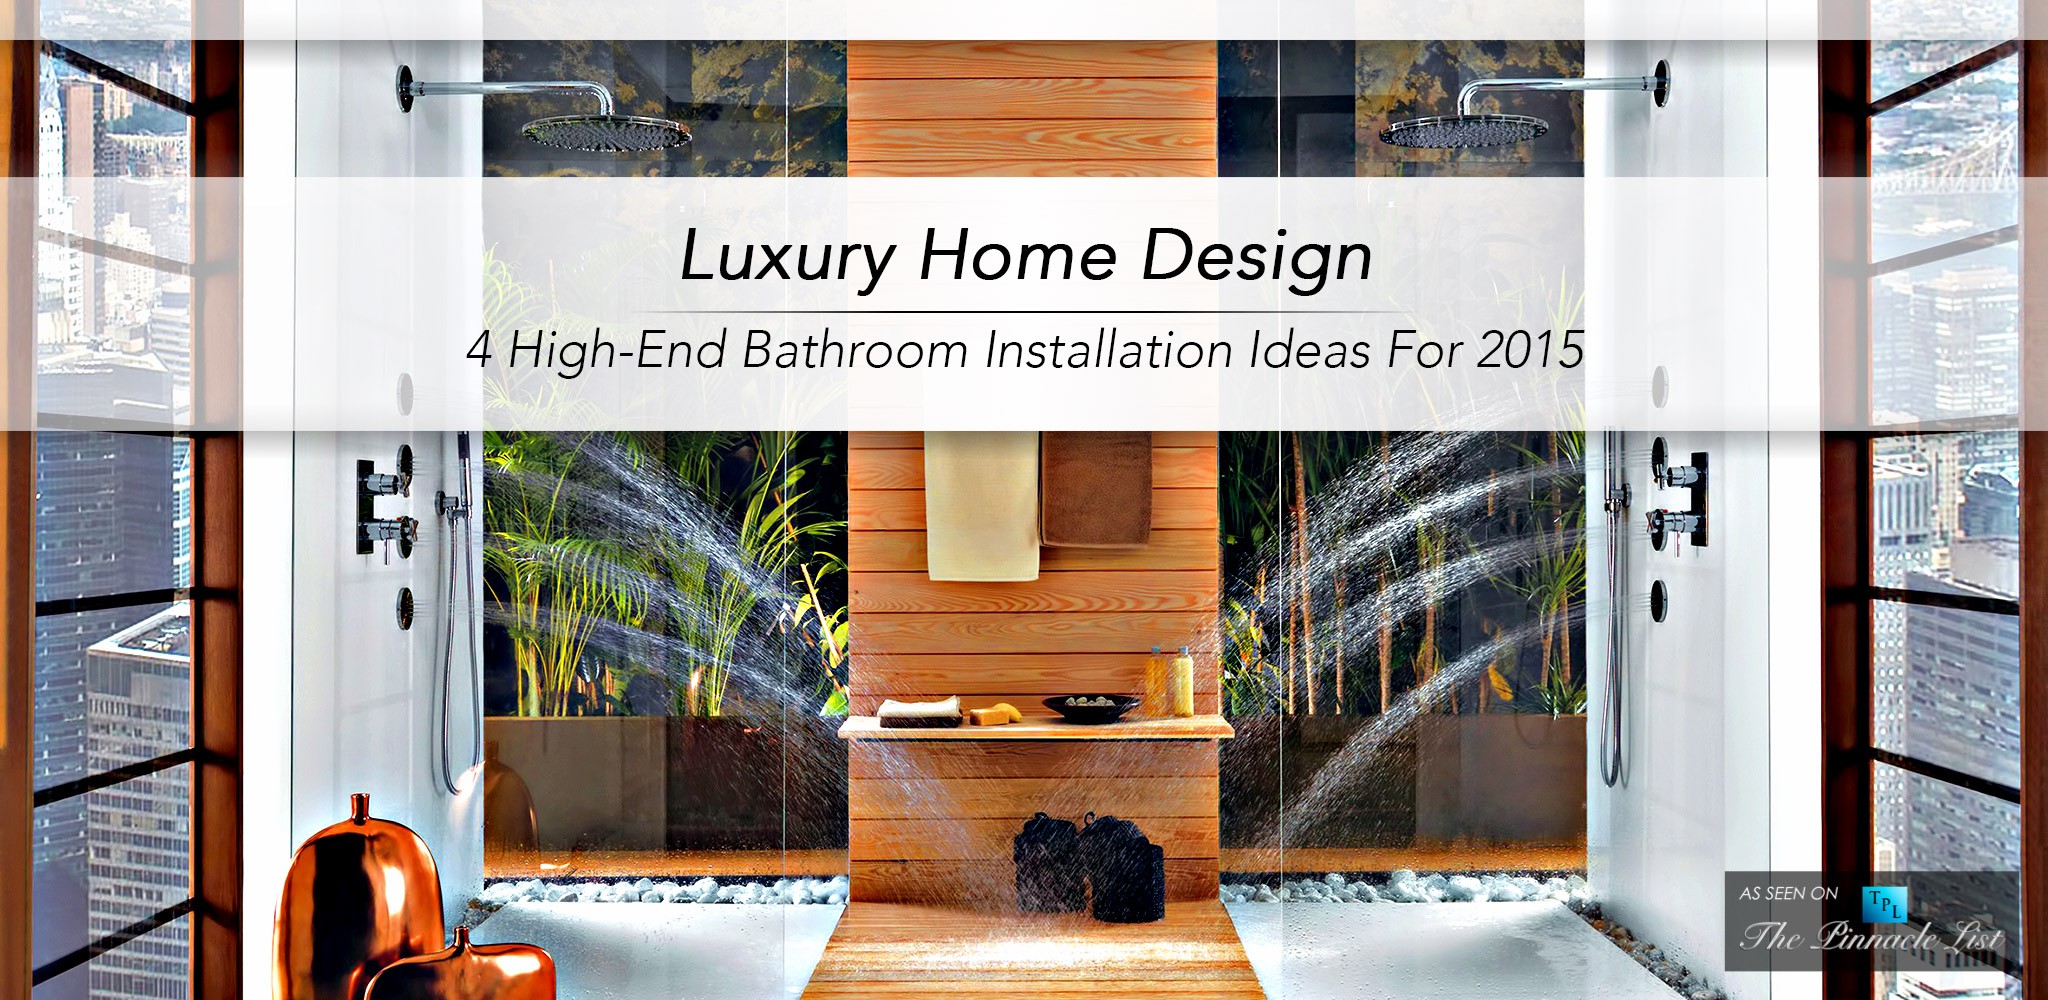 01-Luxury-Home-Design-4-High-End-Bathroom-Installation-Ideas-For-2015-2048x1000-2048x1000